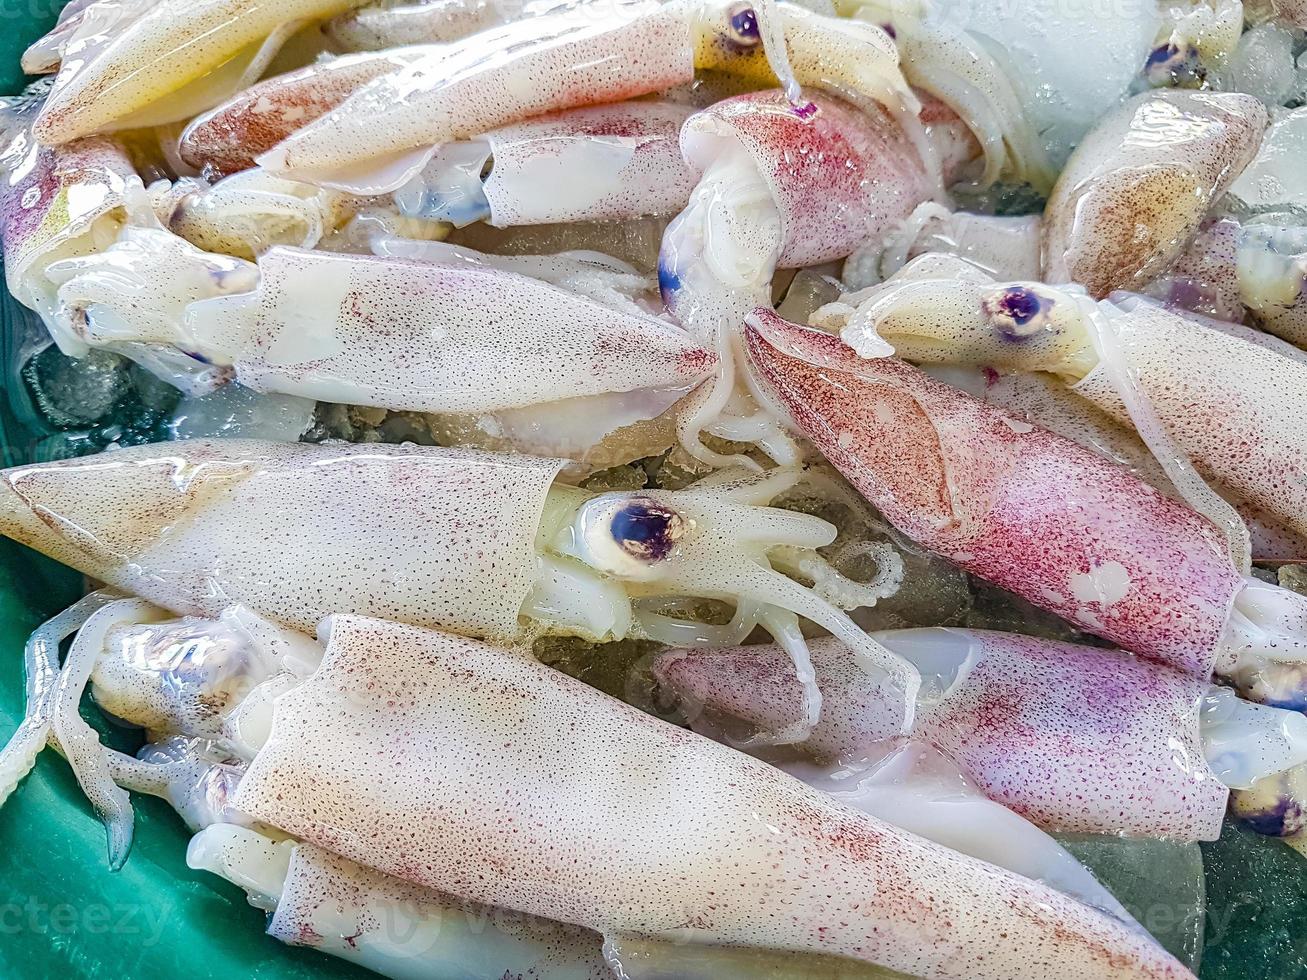 fruits de mer thaïlandais crus à koh samui, thaïlande photo